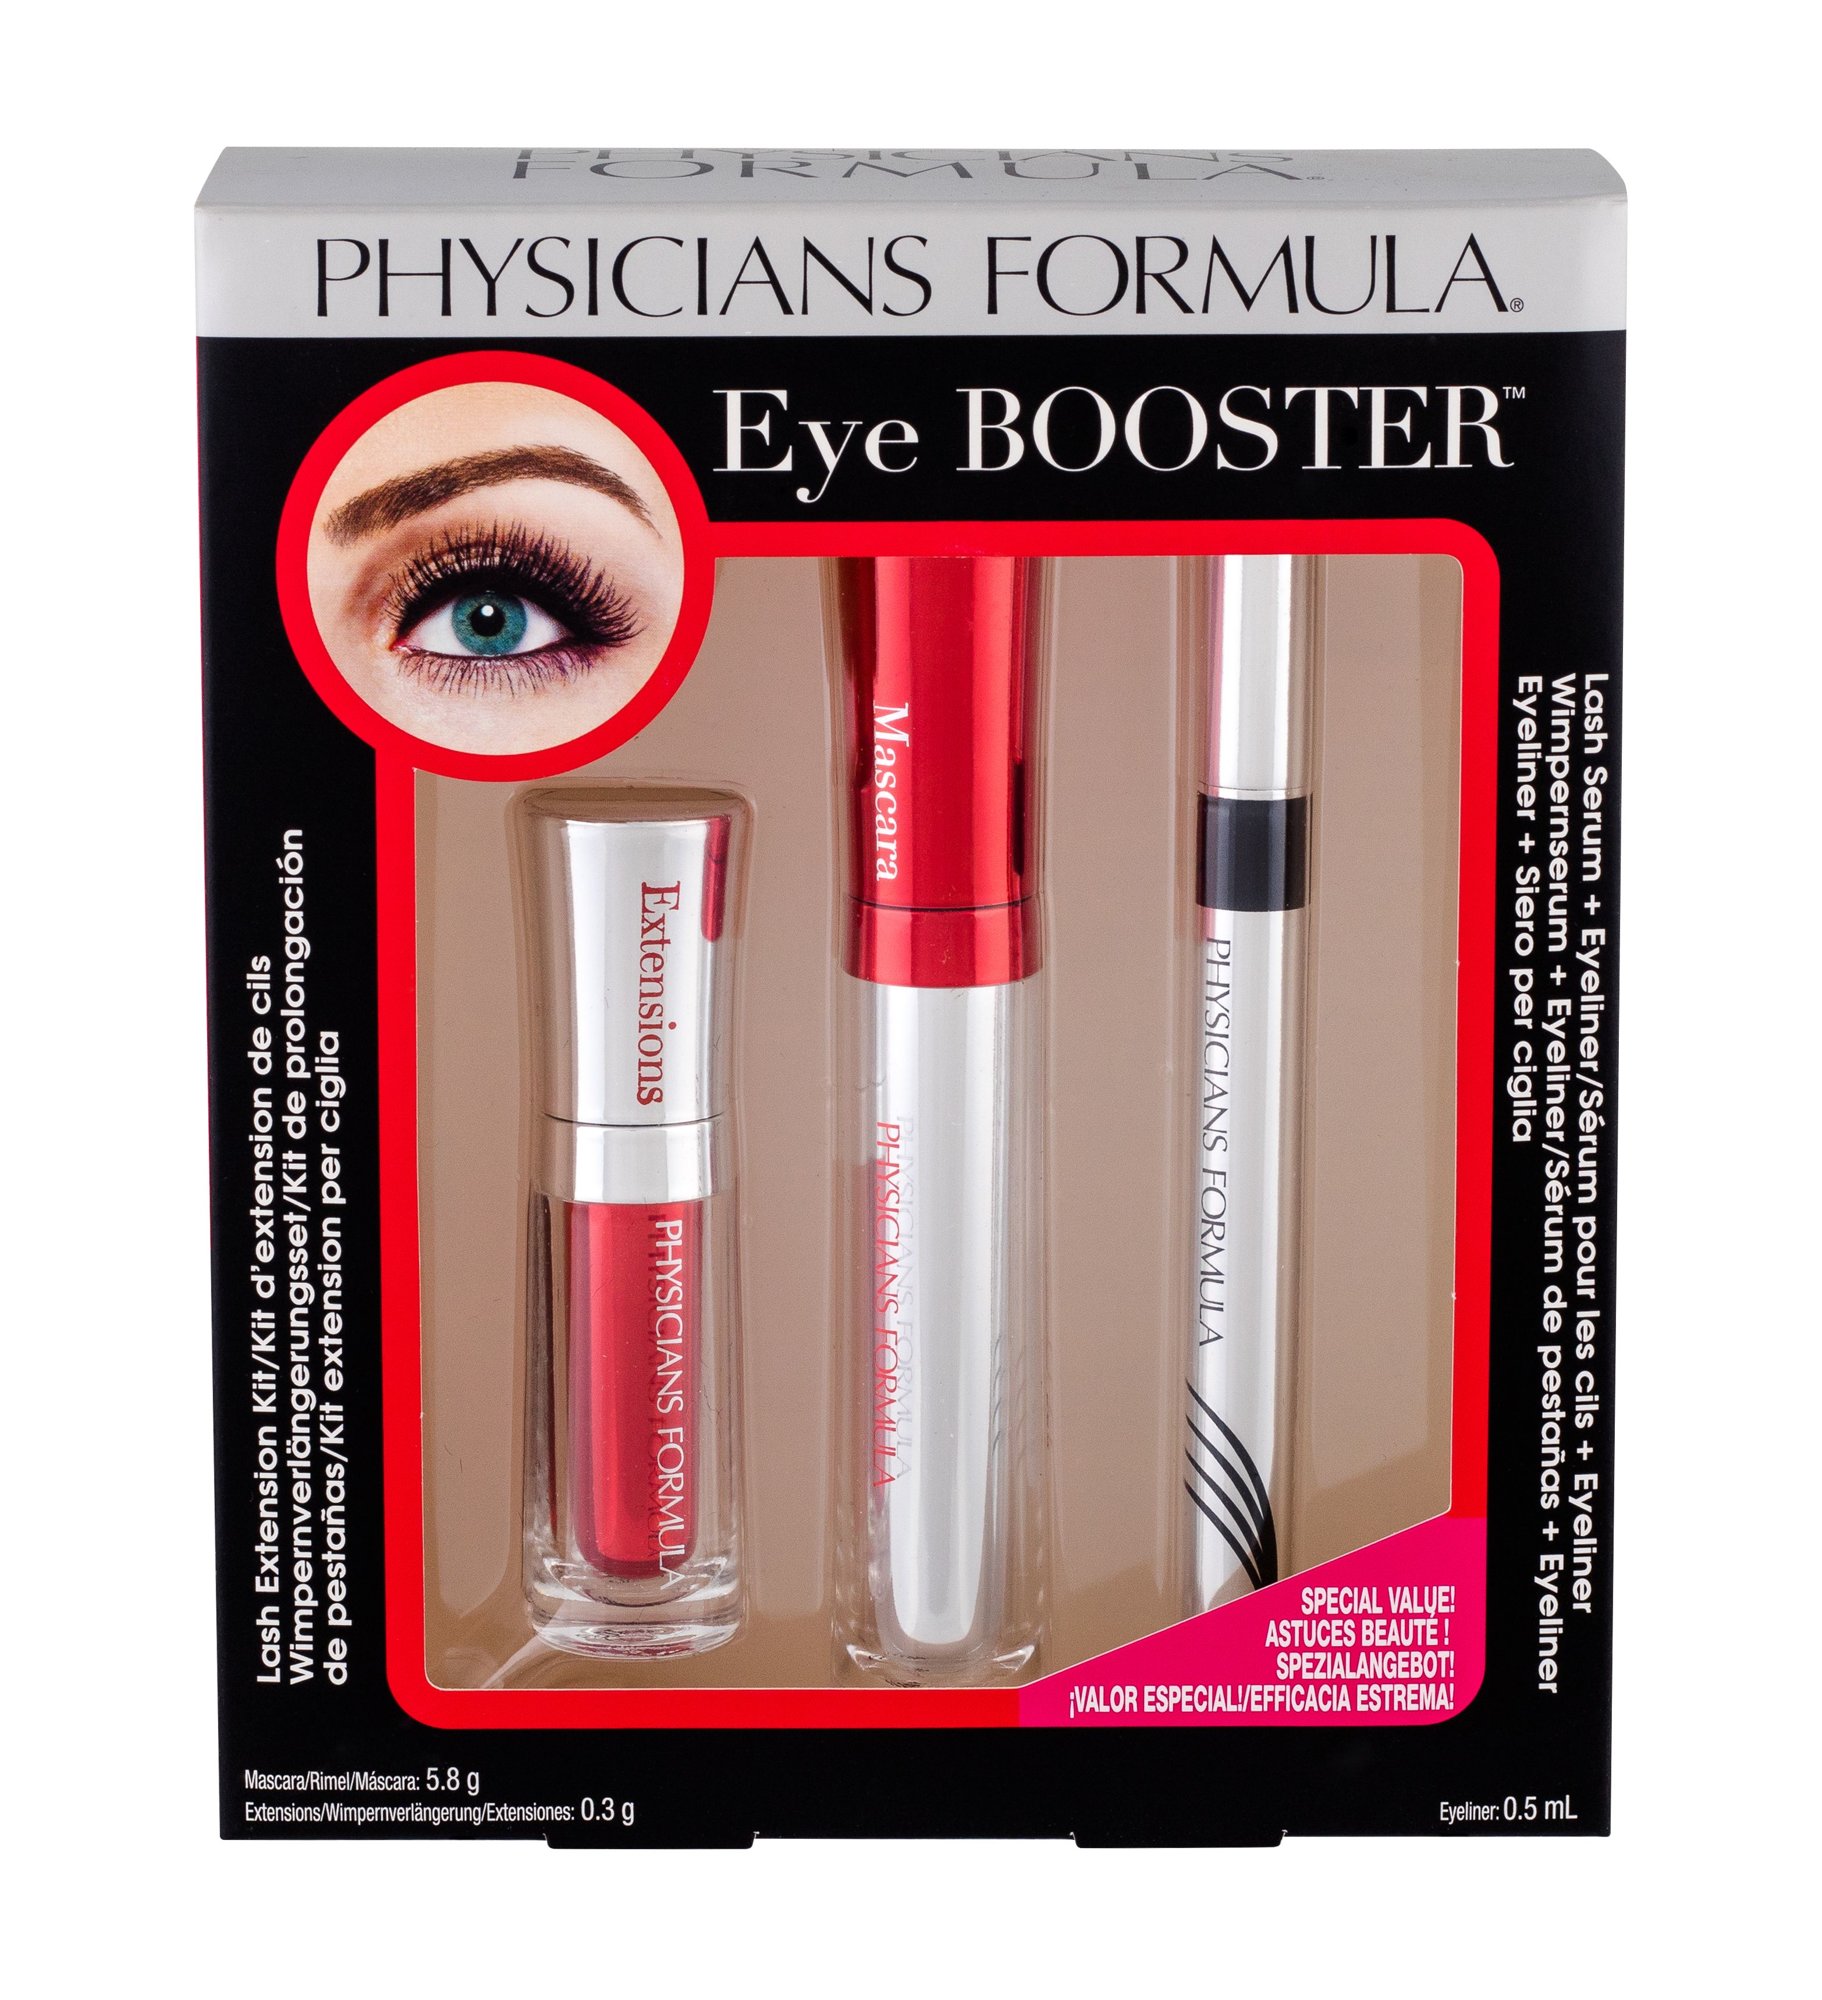 Physicians Formula Eye Booster Lash Extension Kit 5,8g Mascara 5,8 g + Extensions 0,3 g + Eyebrow Gel 6,5 g + Eyebrow Pencil 1,8 g Universal blakstienų tušas Rinkinys (Pažeista pakuotė)